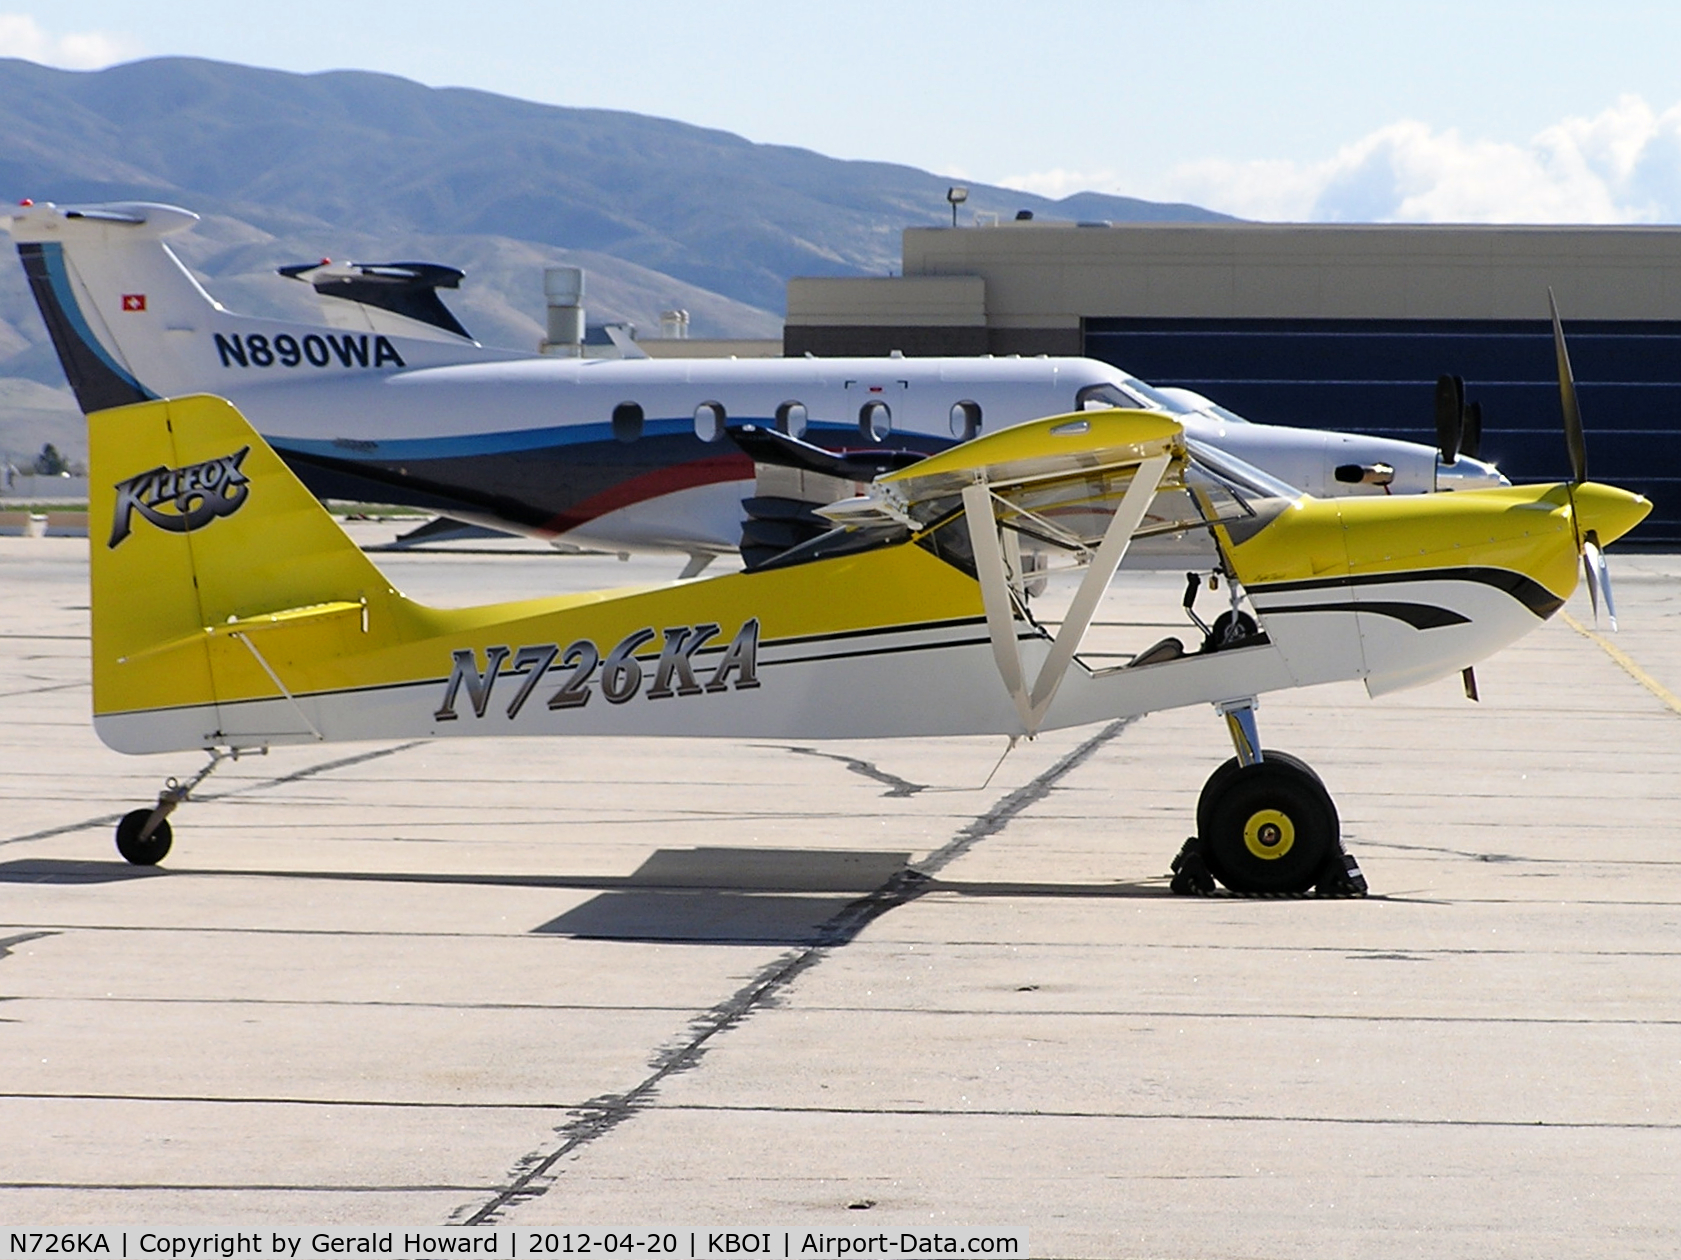 N726KA, Foxair Kitfox Light Sport C/N KA09046153, Parked on the Western Aircraft ramp.